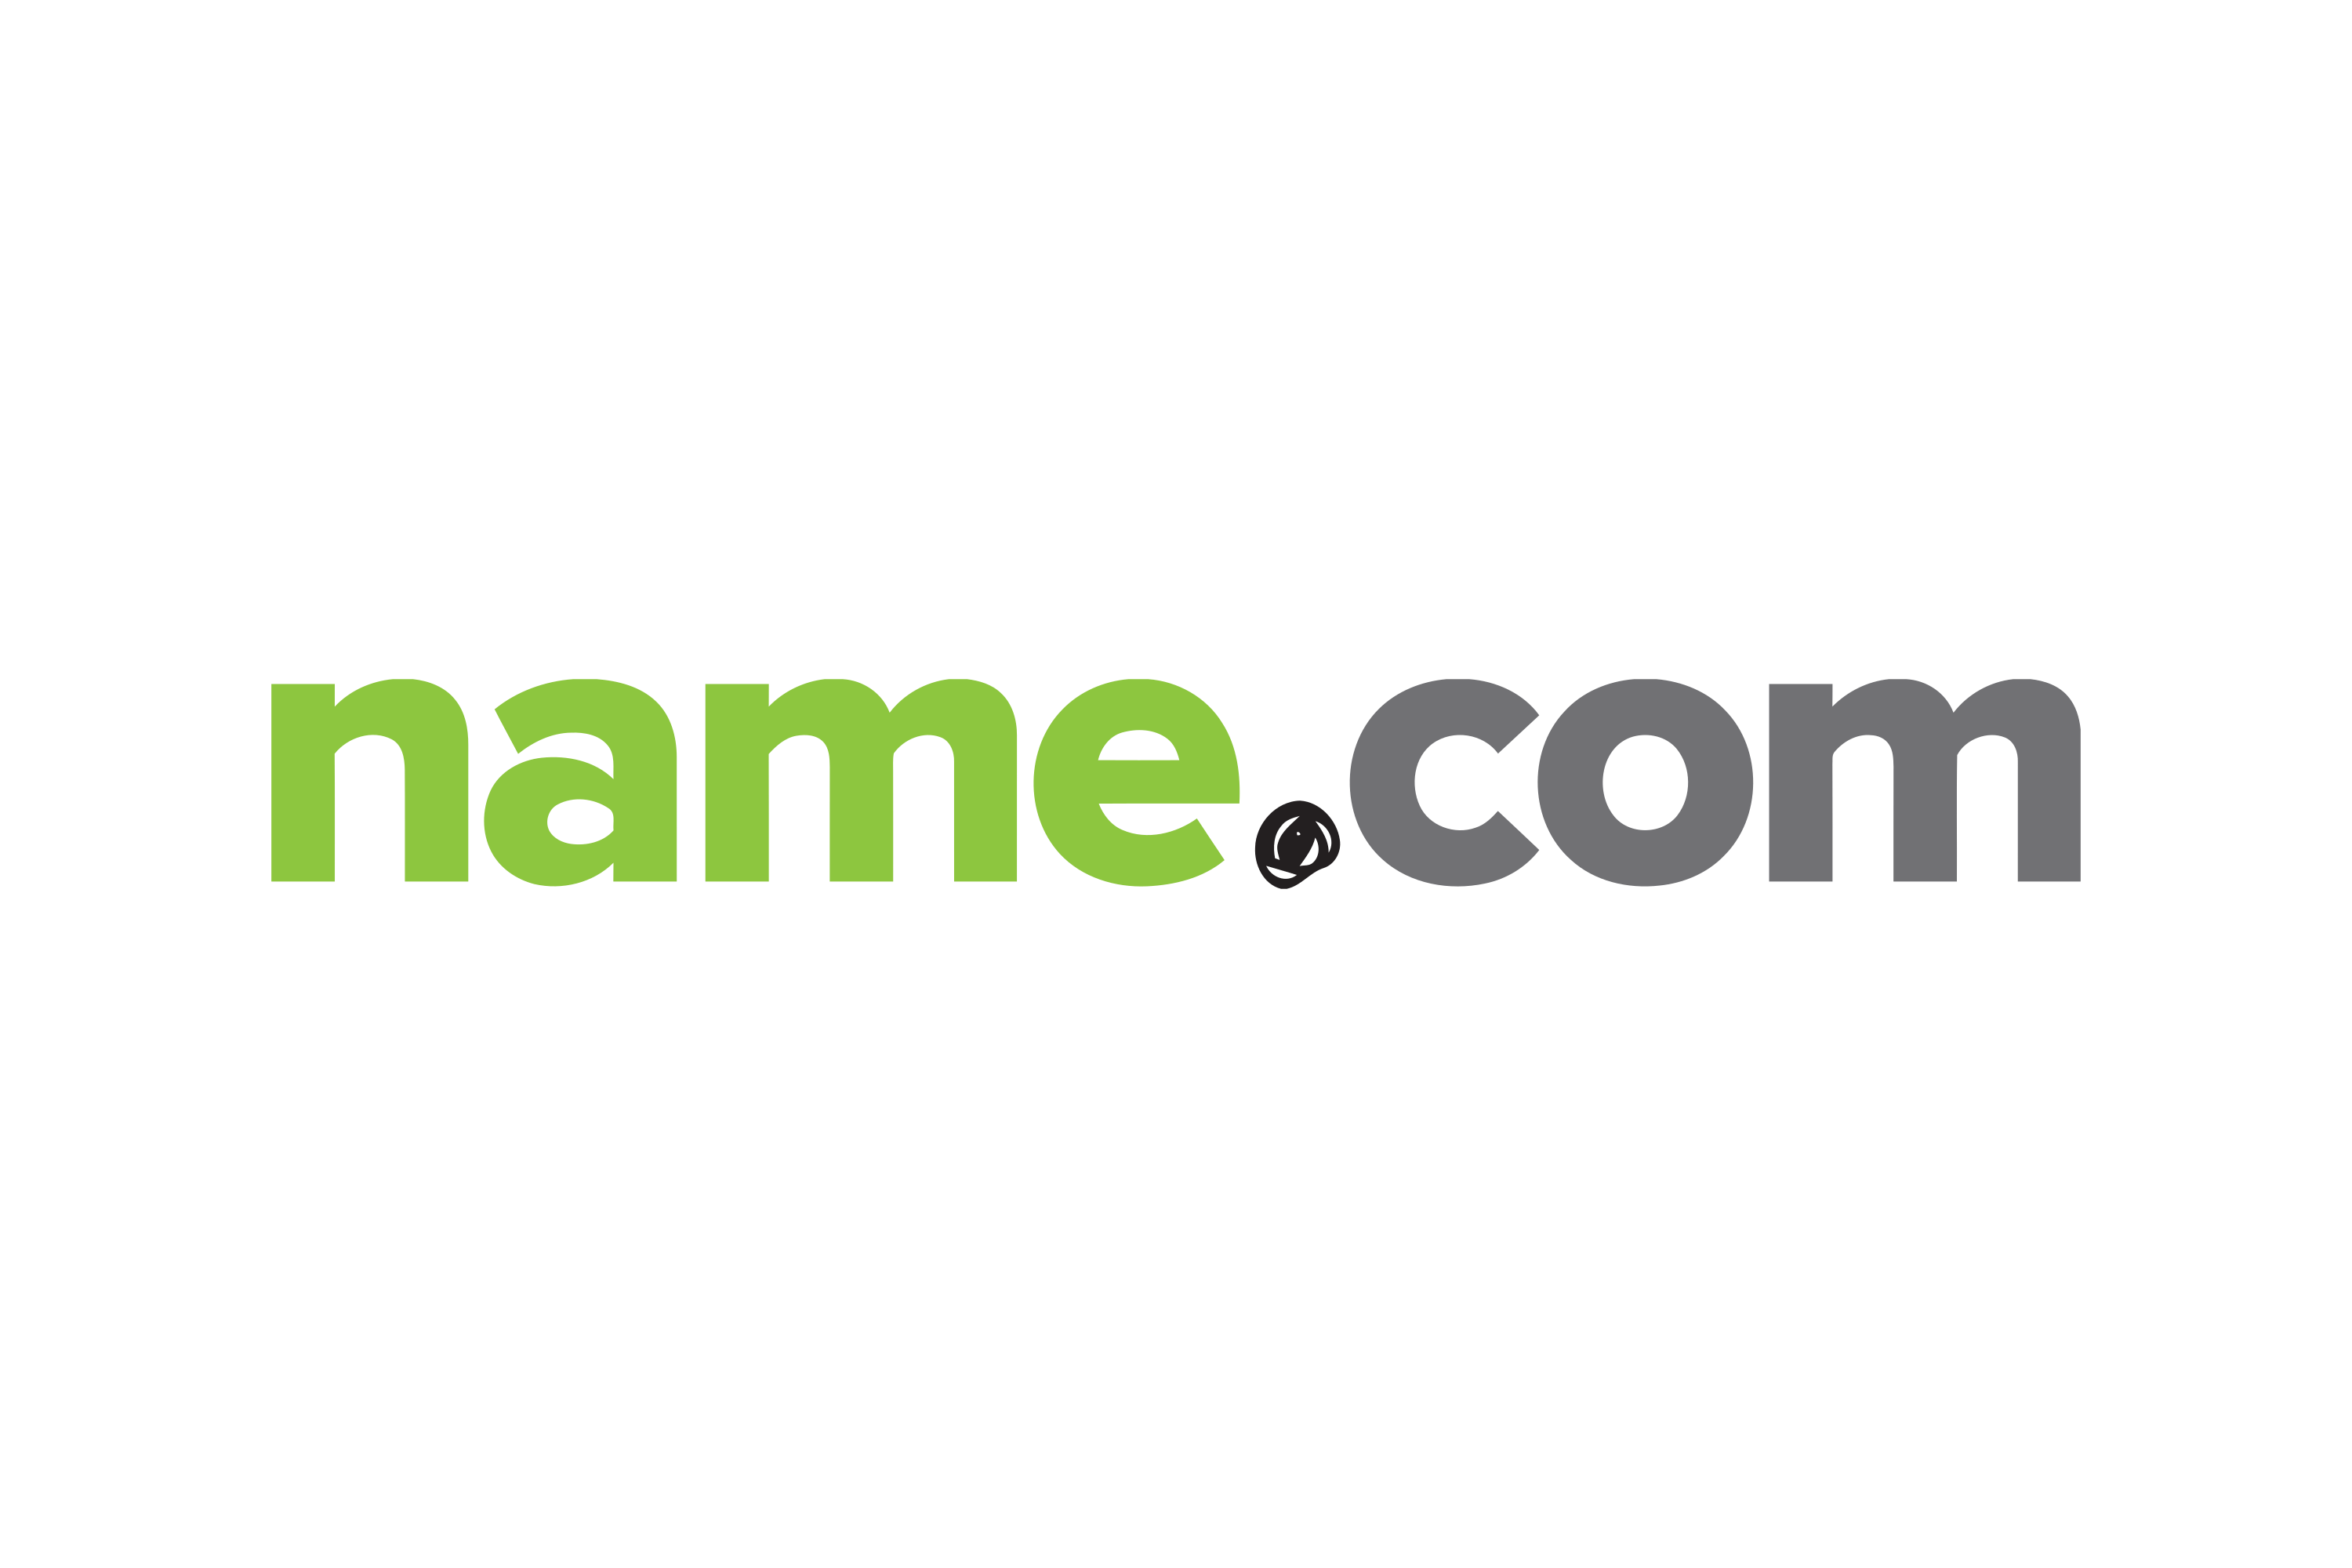 Checkyour name com сайт. Name.com. The names. Ivacom логотип. Логотип for name.